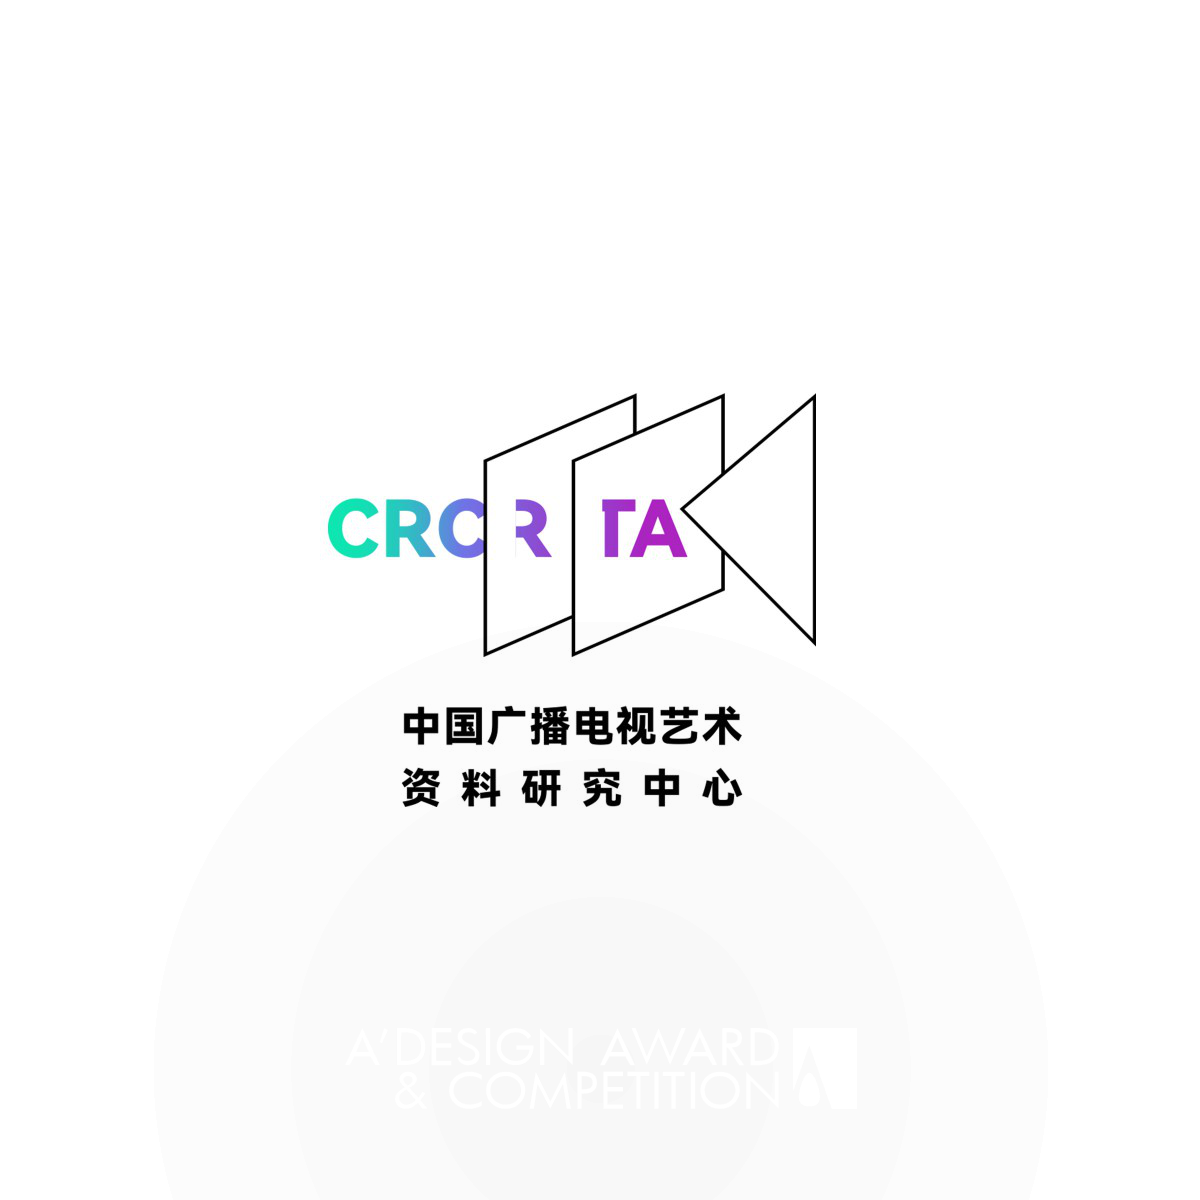 CRCRTA Corporate Identity by Chen Zilong